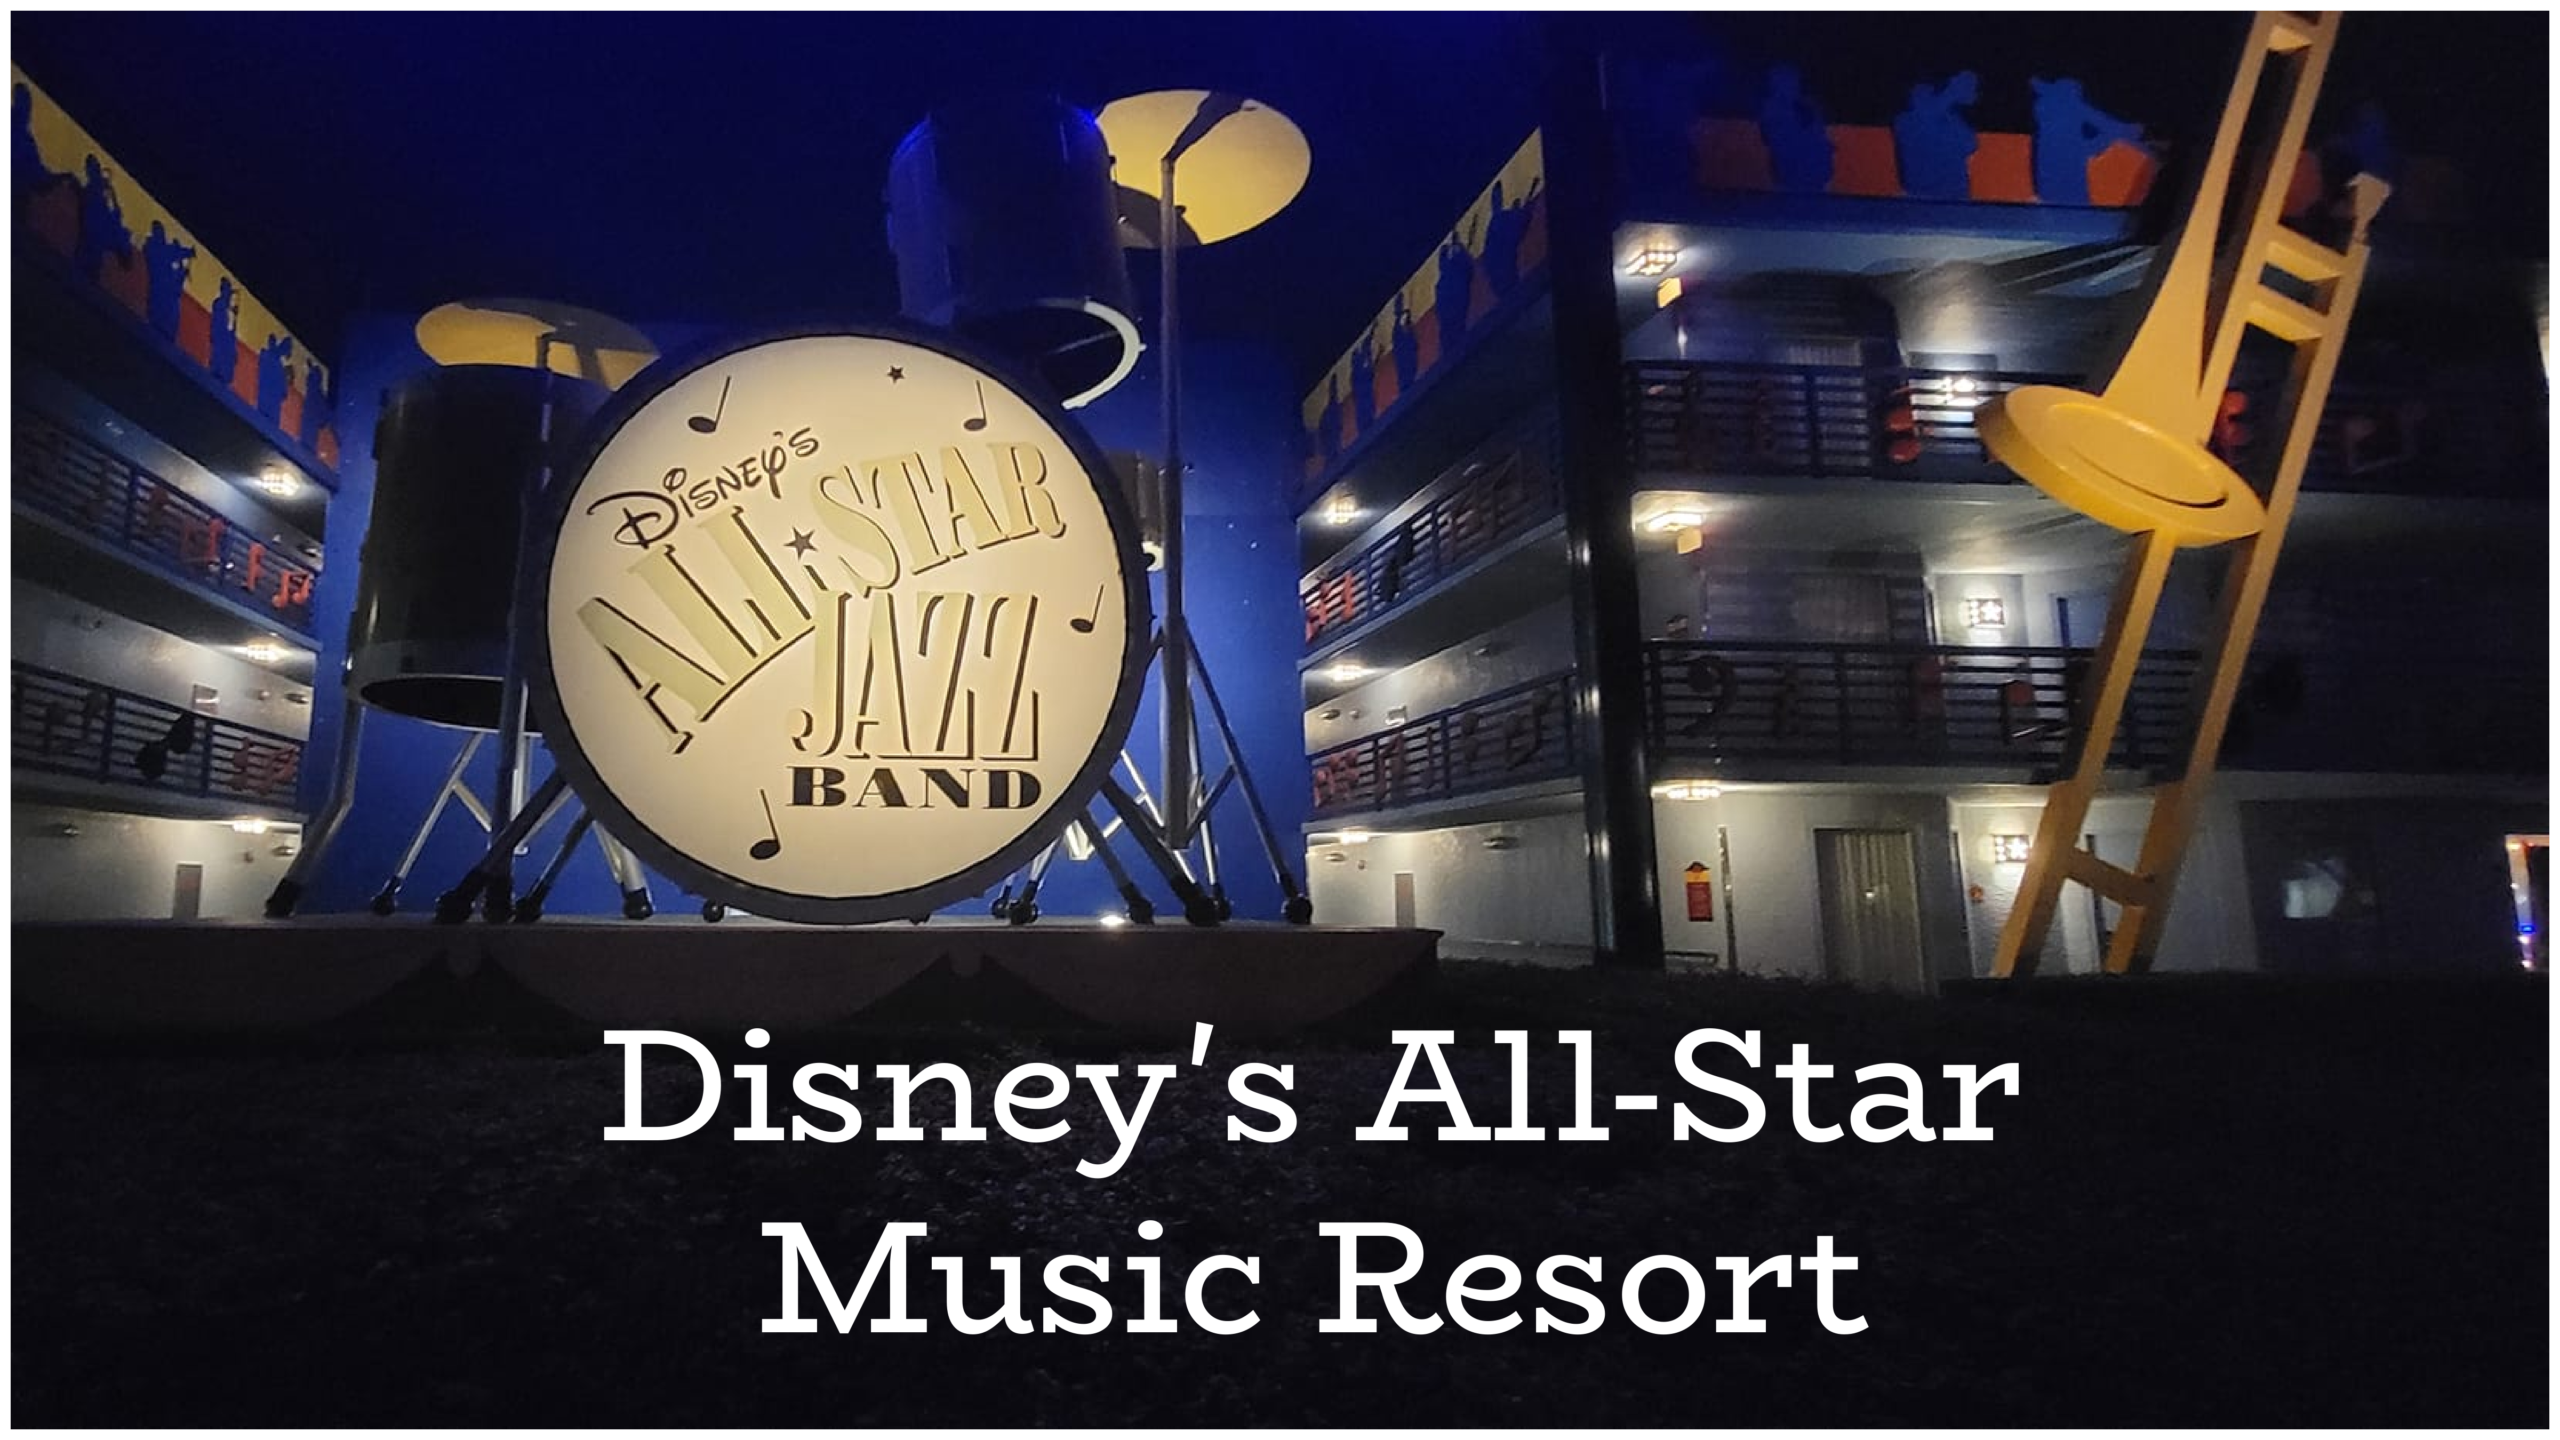 Disney’s All-Star Music Resort